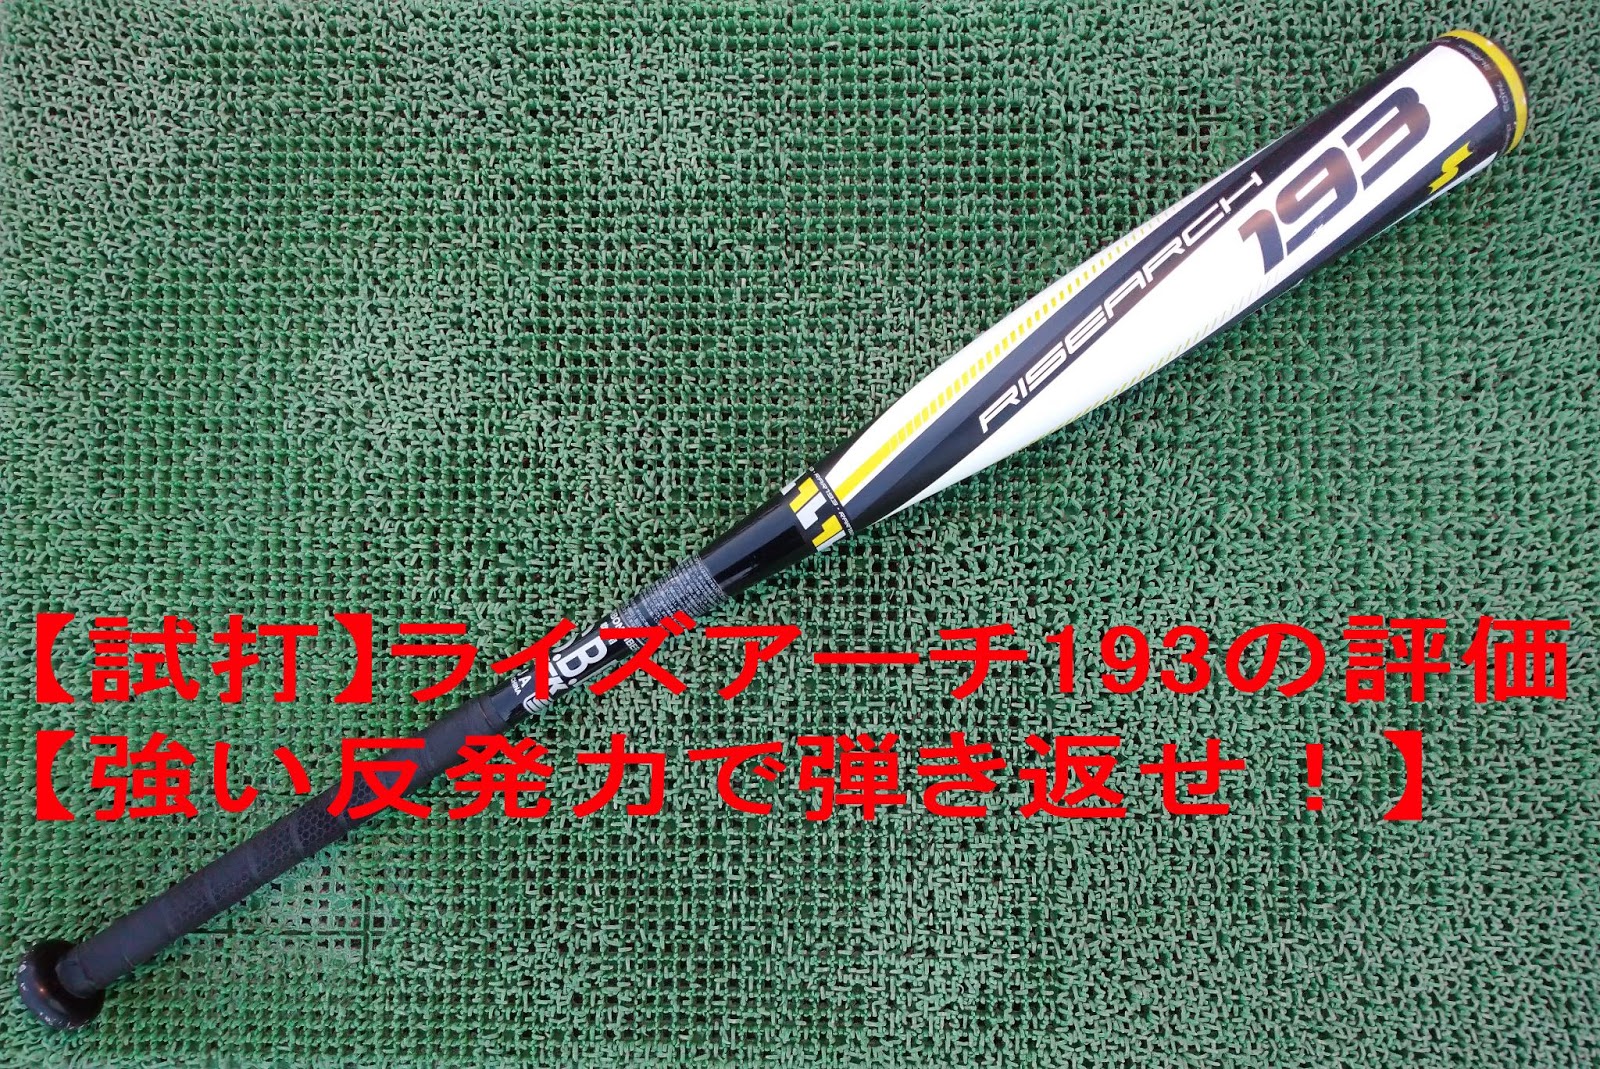 SSK(エスエスケイ) 野球 少年軟式FRP製バットライズアーチJ  SBB5024 ブラック×ホワイト(9010) 78cm